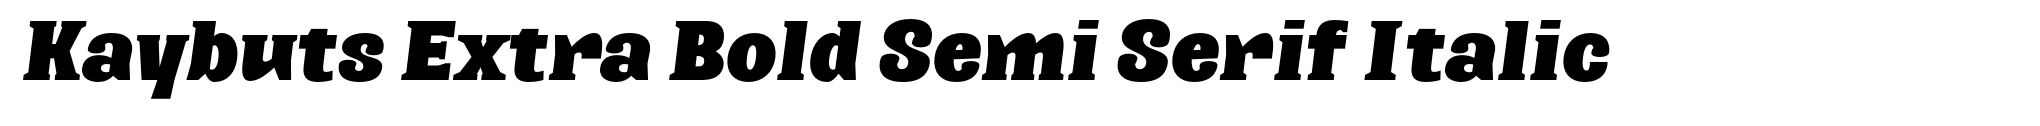 Kaybuts Extra Bold Semi Serif Italic image